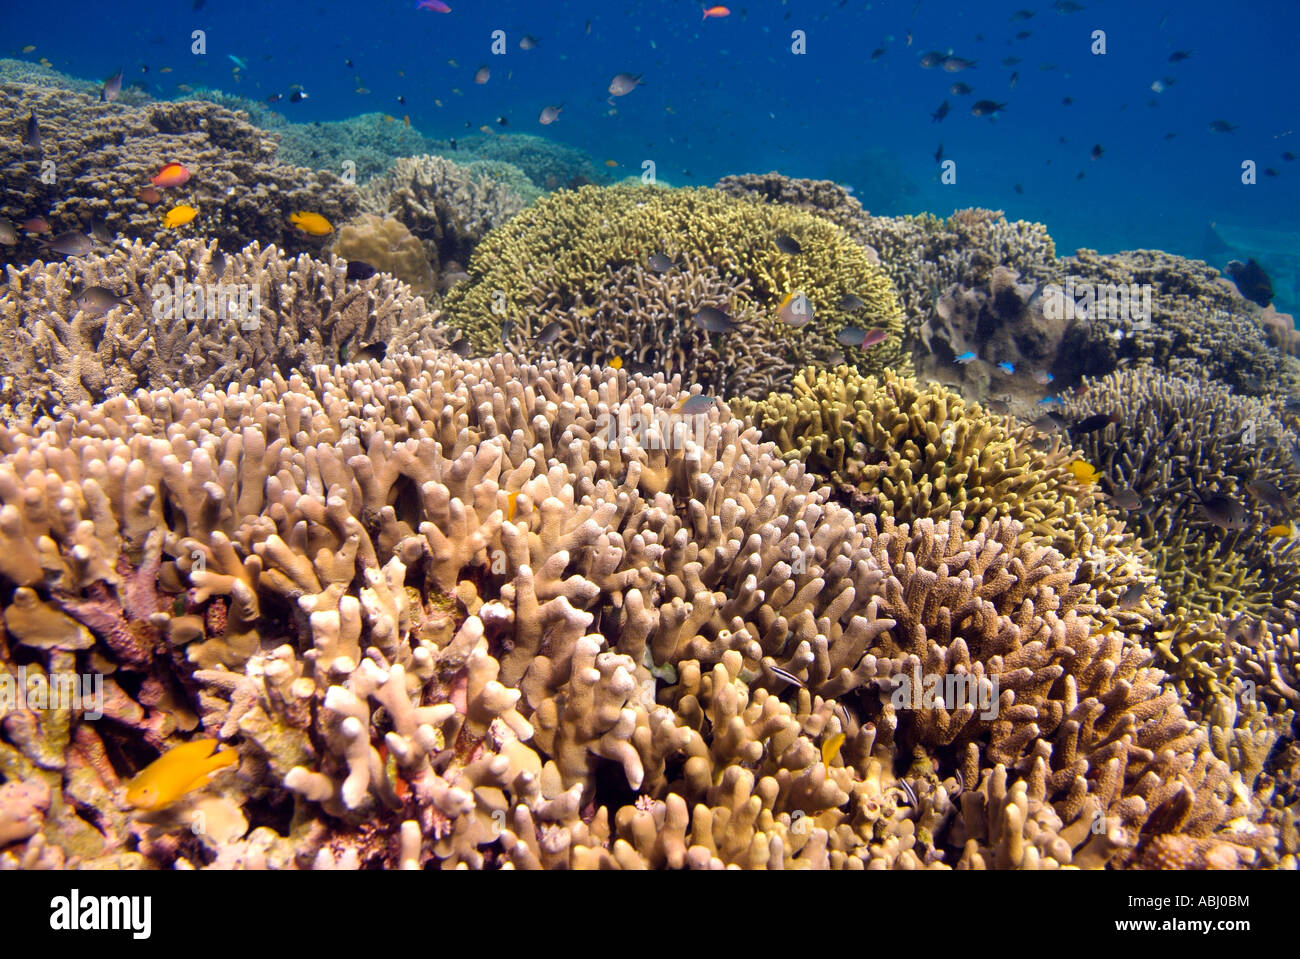 Colony of Stylophora pistillata coral around the Bunaken Island Stock Photo